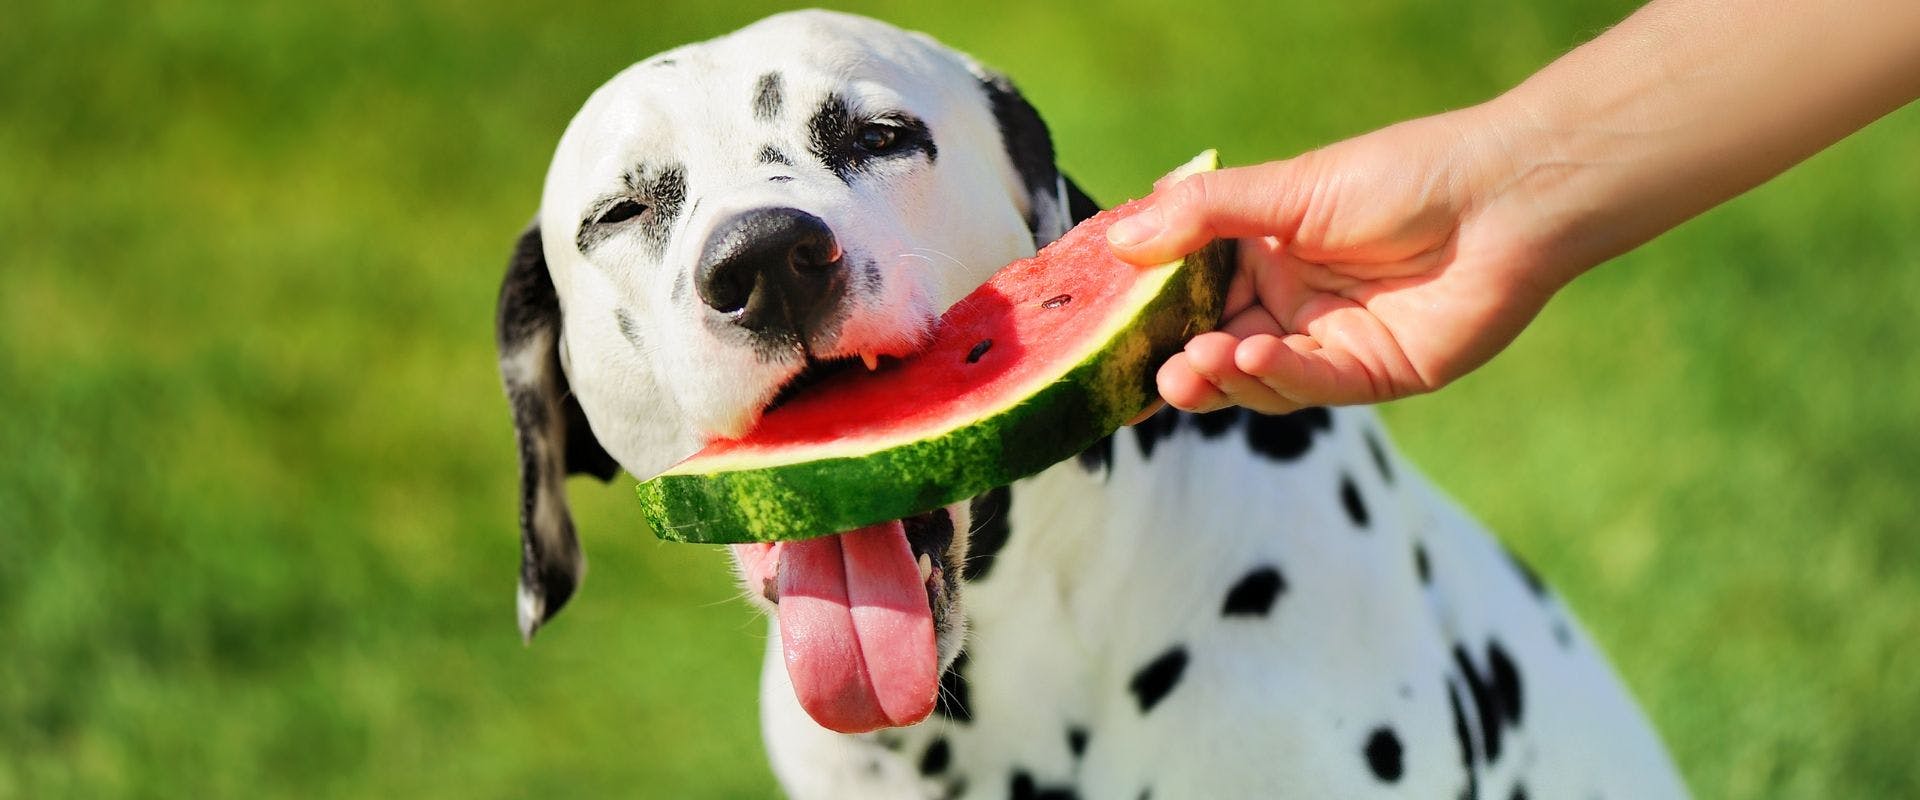 Dalmatian dog eating a slice of watermelon